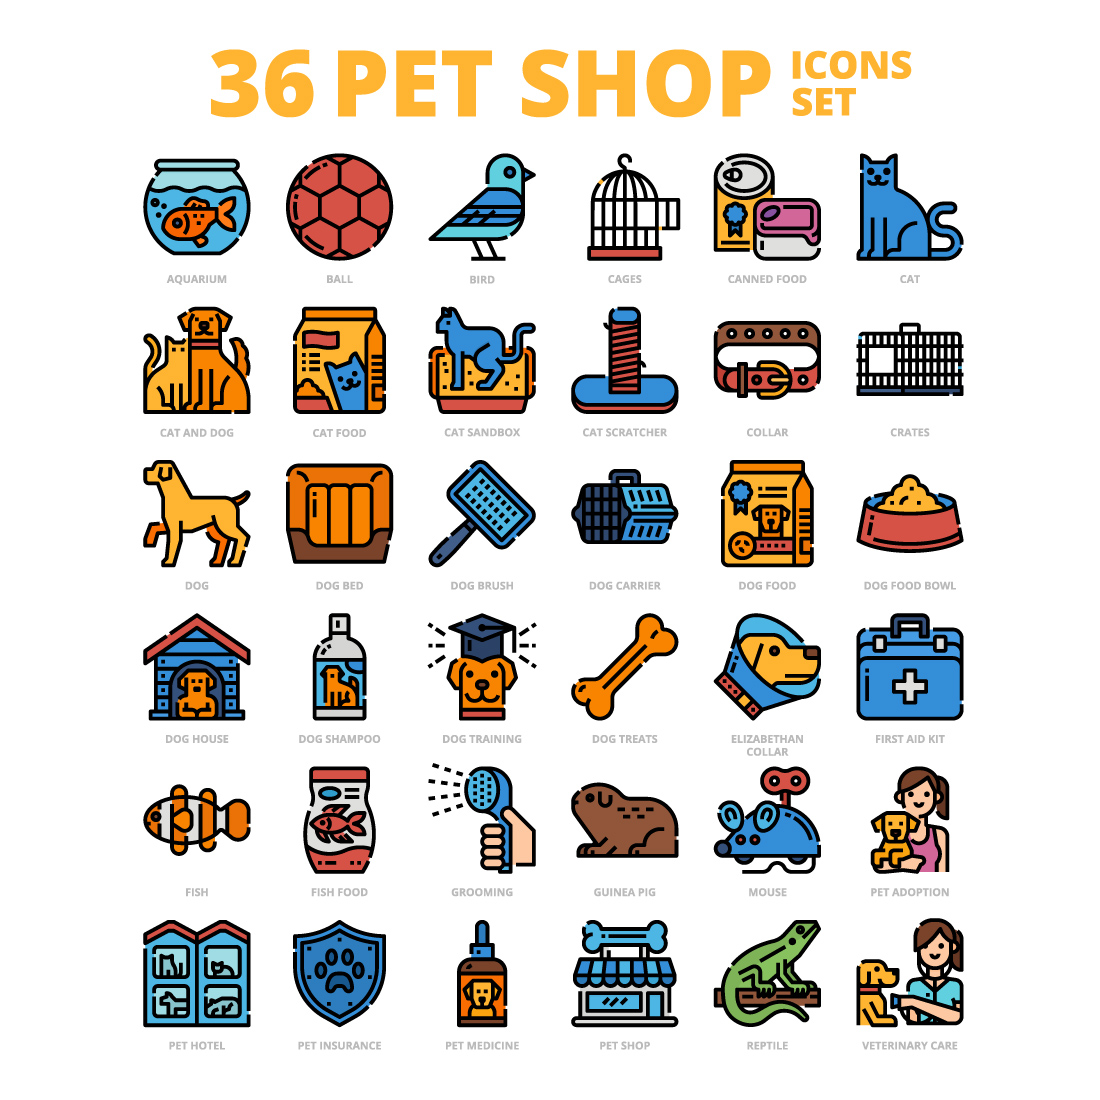 36 Pet Shop Icons Set x 4 Styles cover image.